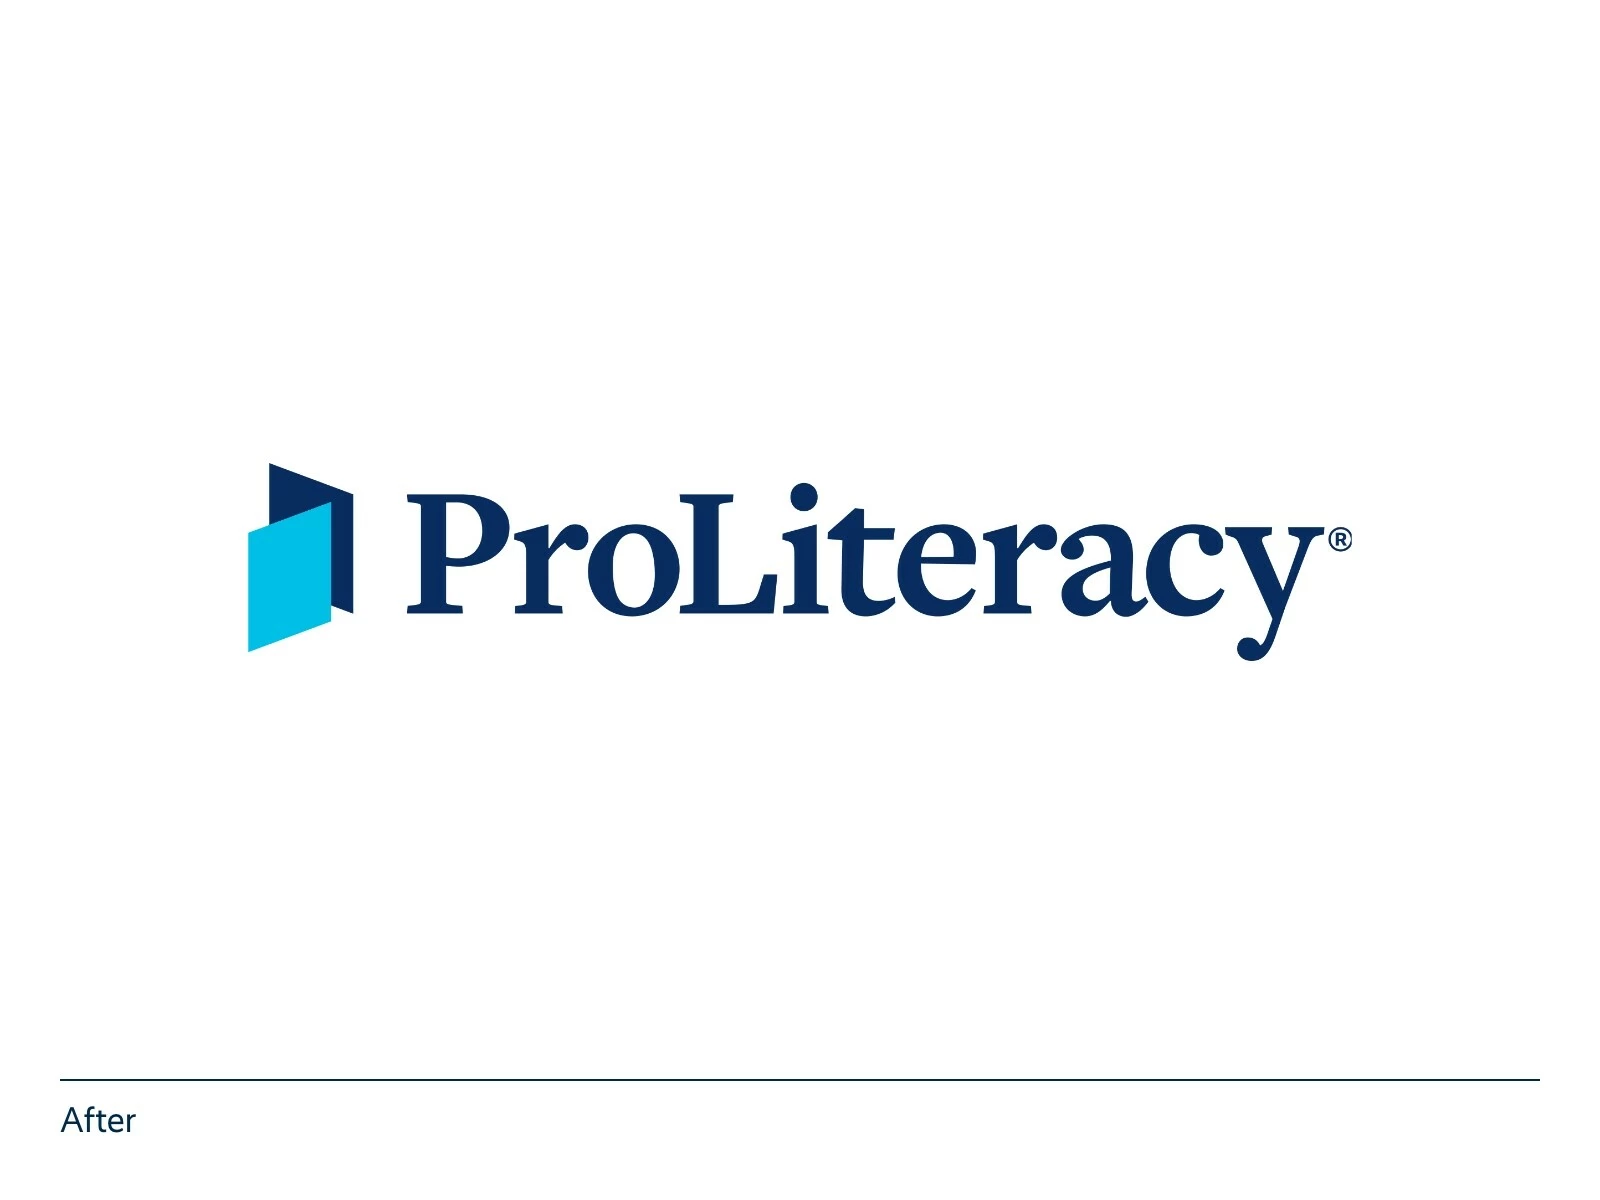 Updated ProLiteracy logo